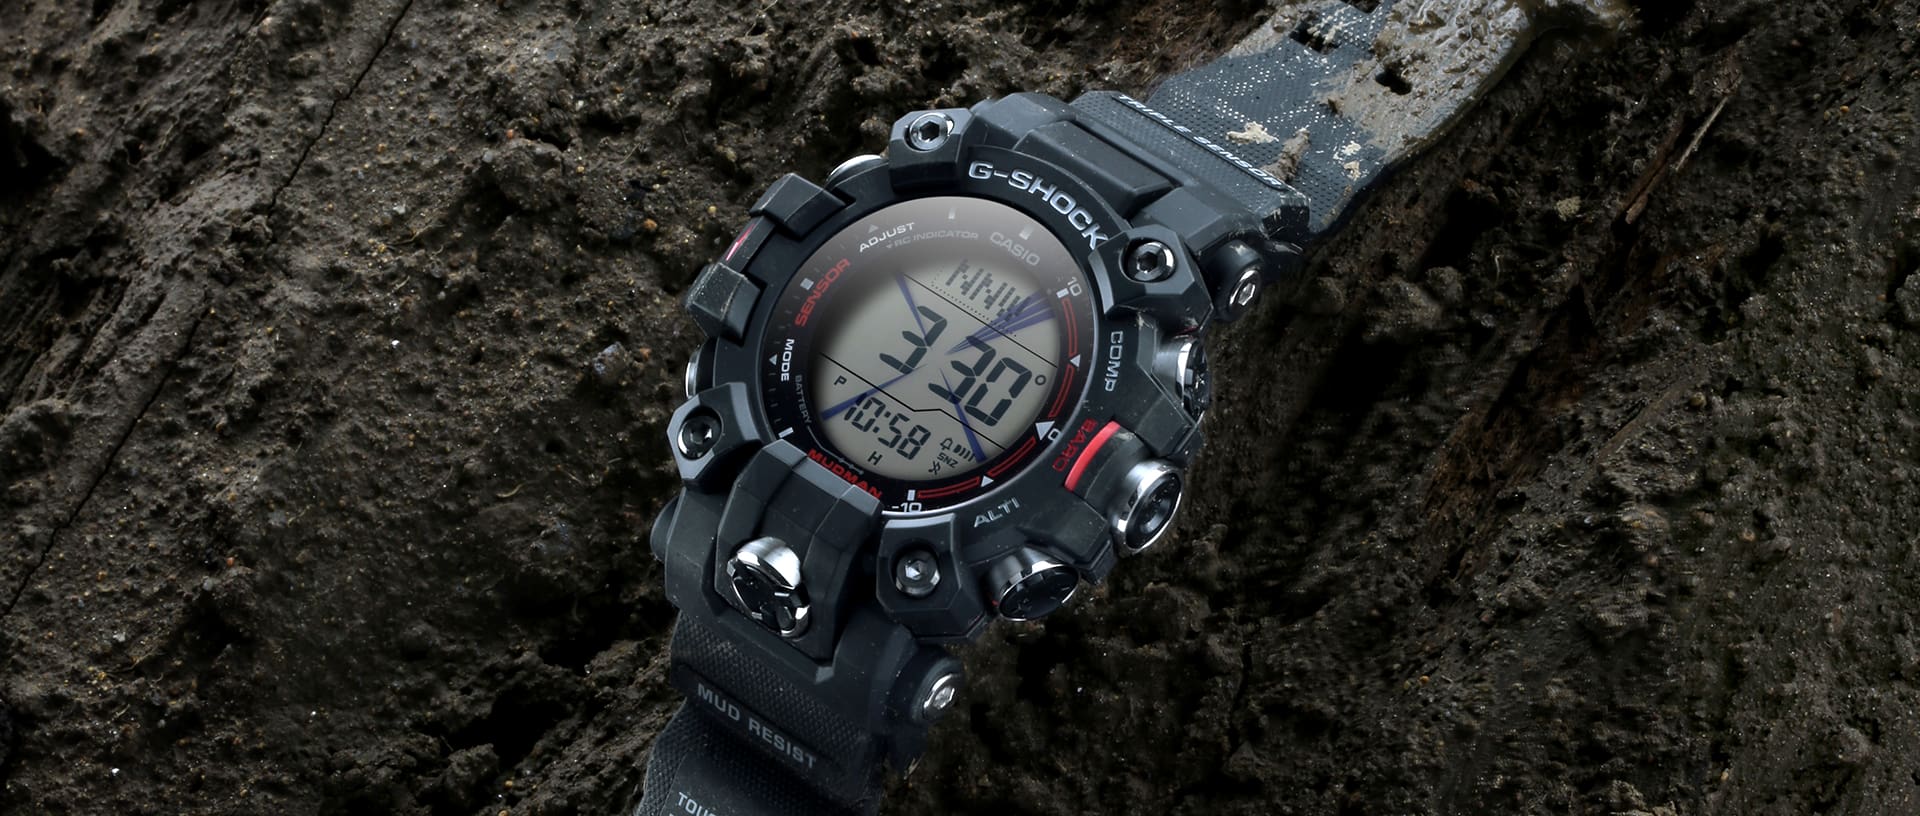 G-SHOCK MUDMAN GW9500 Digital Watch with MUD RESIST and Triple Sensor